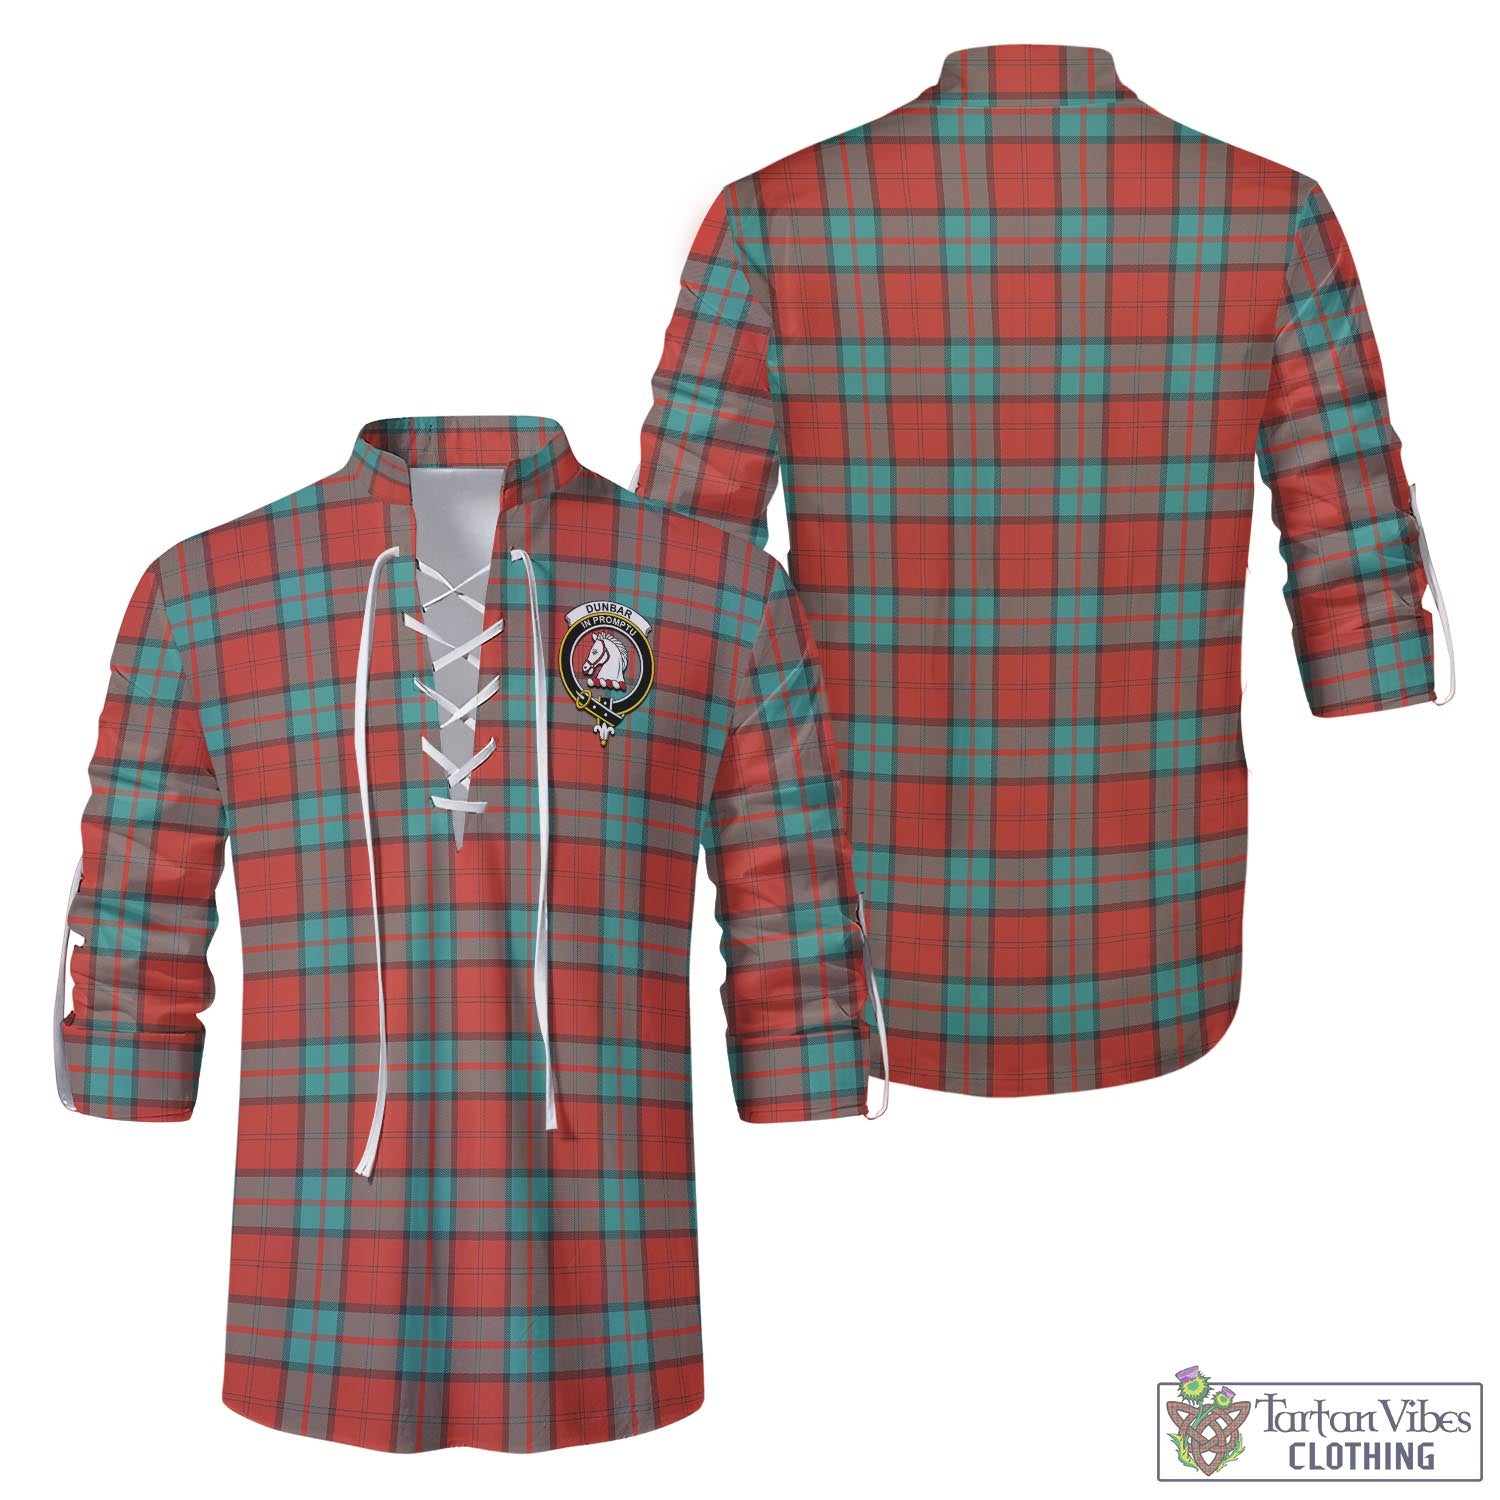 Tartan Vibes Clothing Dunbar Ancient Tartan Men's Scottish Traditional Jacobite Ghillie Kilt Shirt with Family Crest